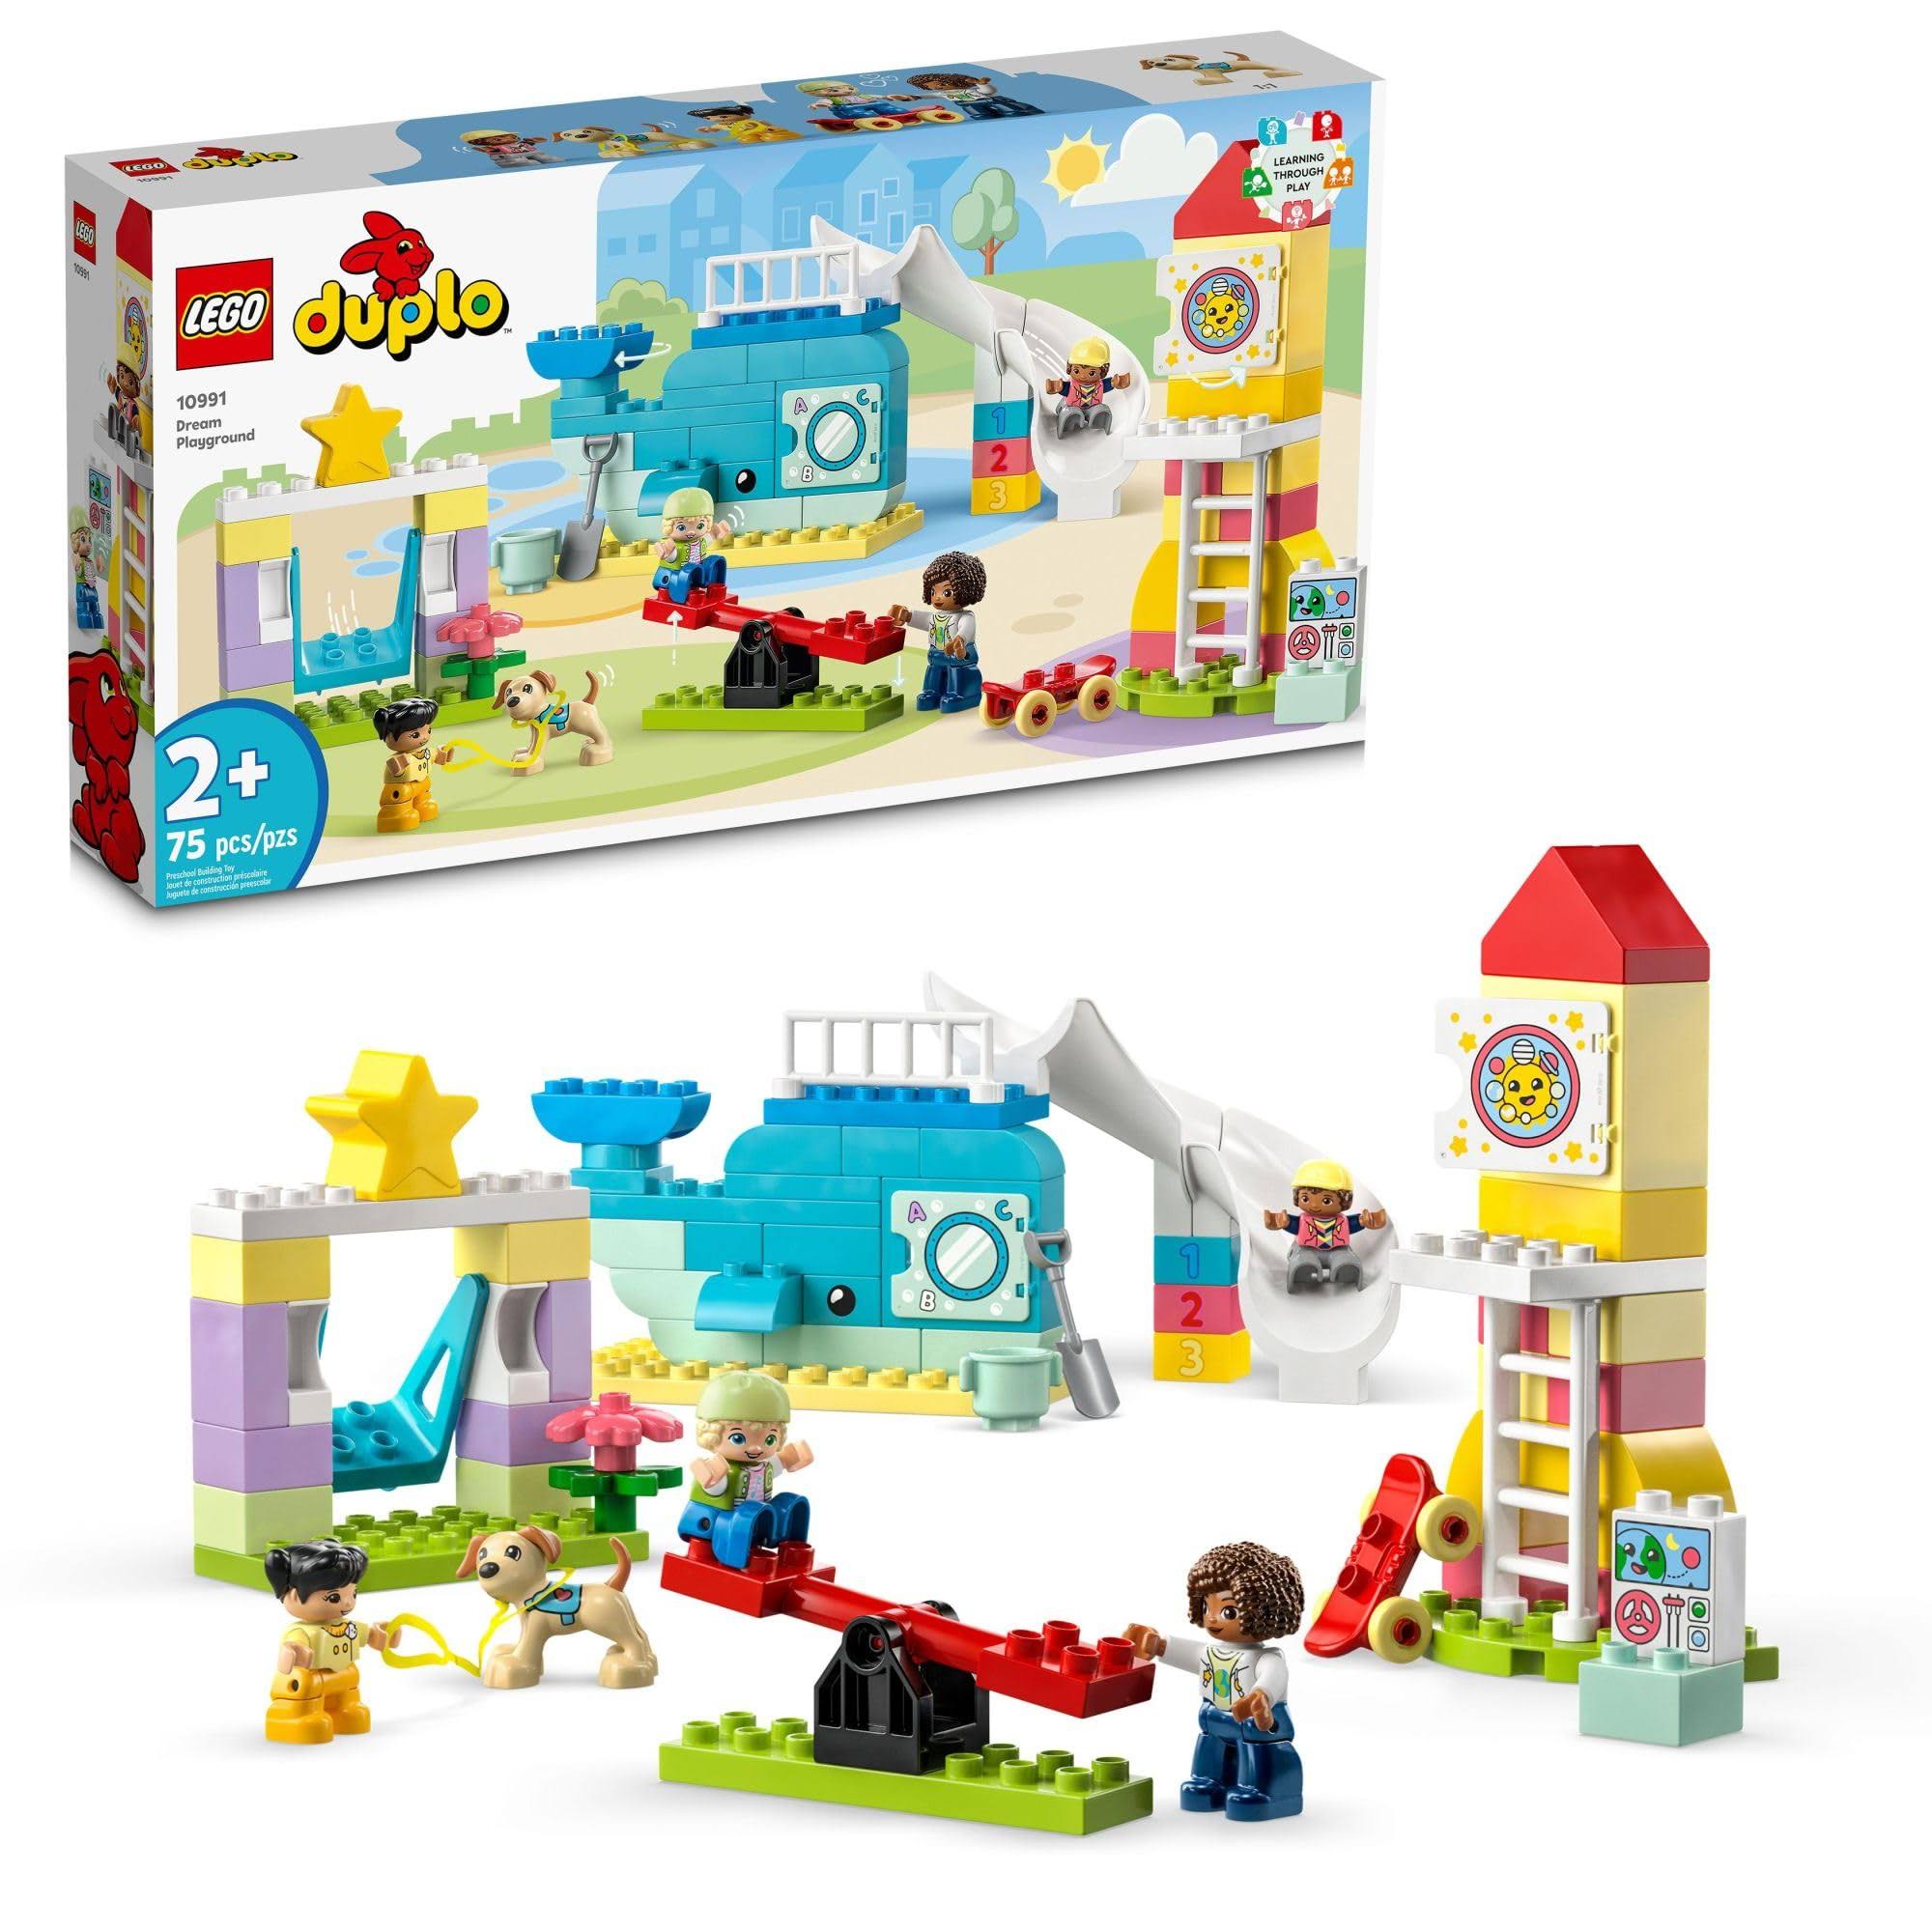 LEGO DUPLO Town Dream Playground 10991 Building Set